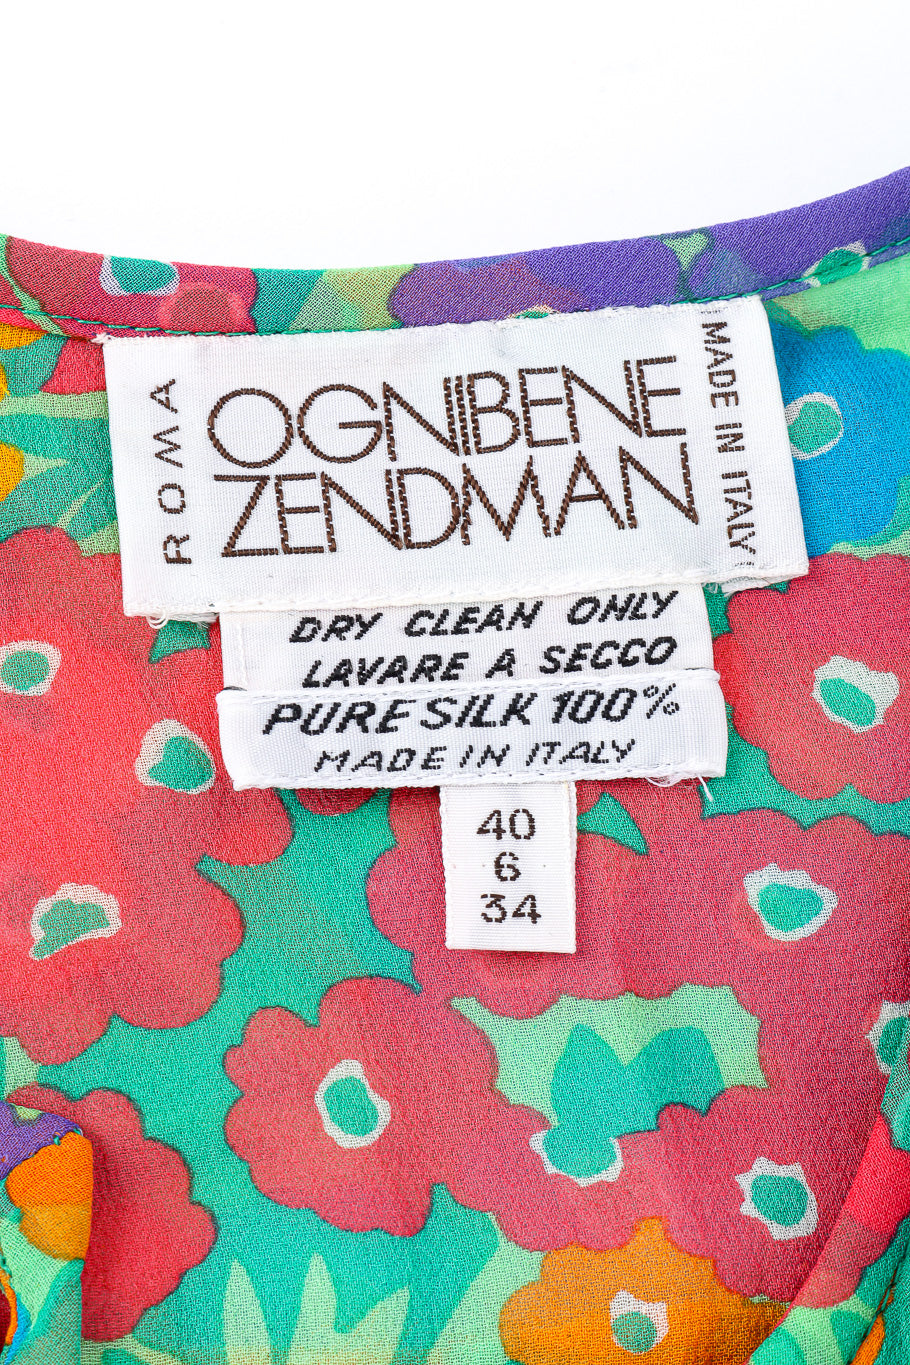 Silk blouse and scarf by Ognibene Zendman label  @recessla